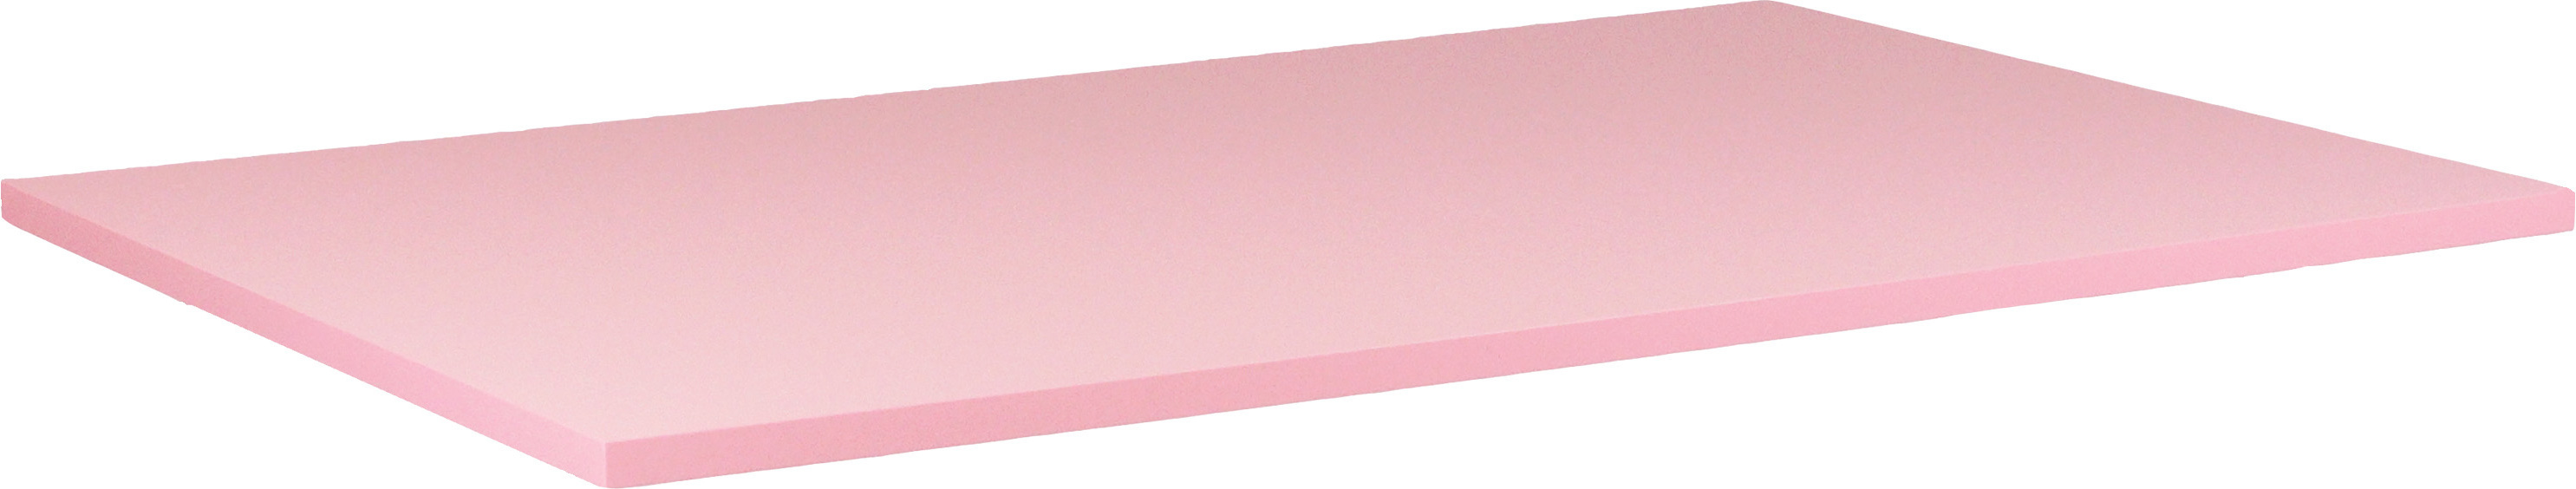 Elfen Ergodesk -pöytälevy, 160 x 75 cm, pinkki